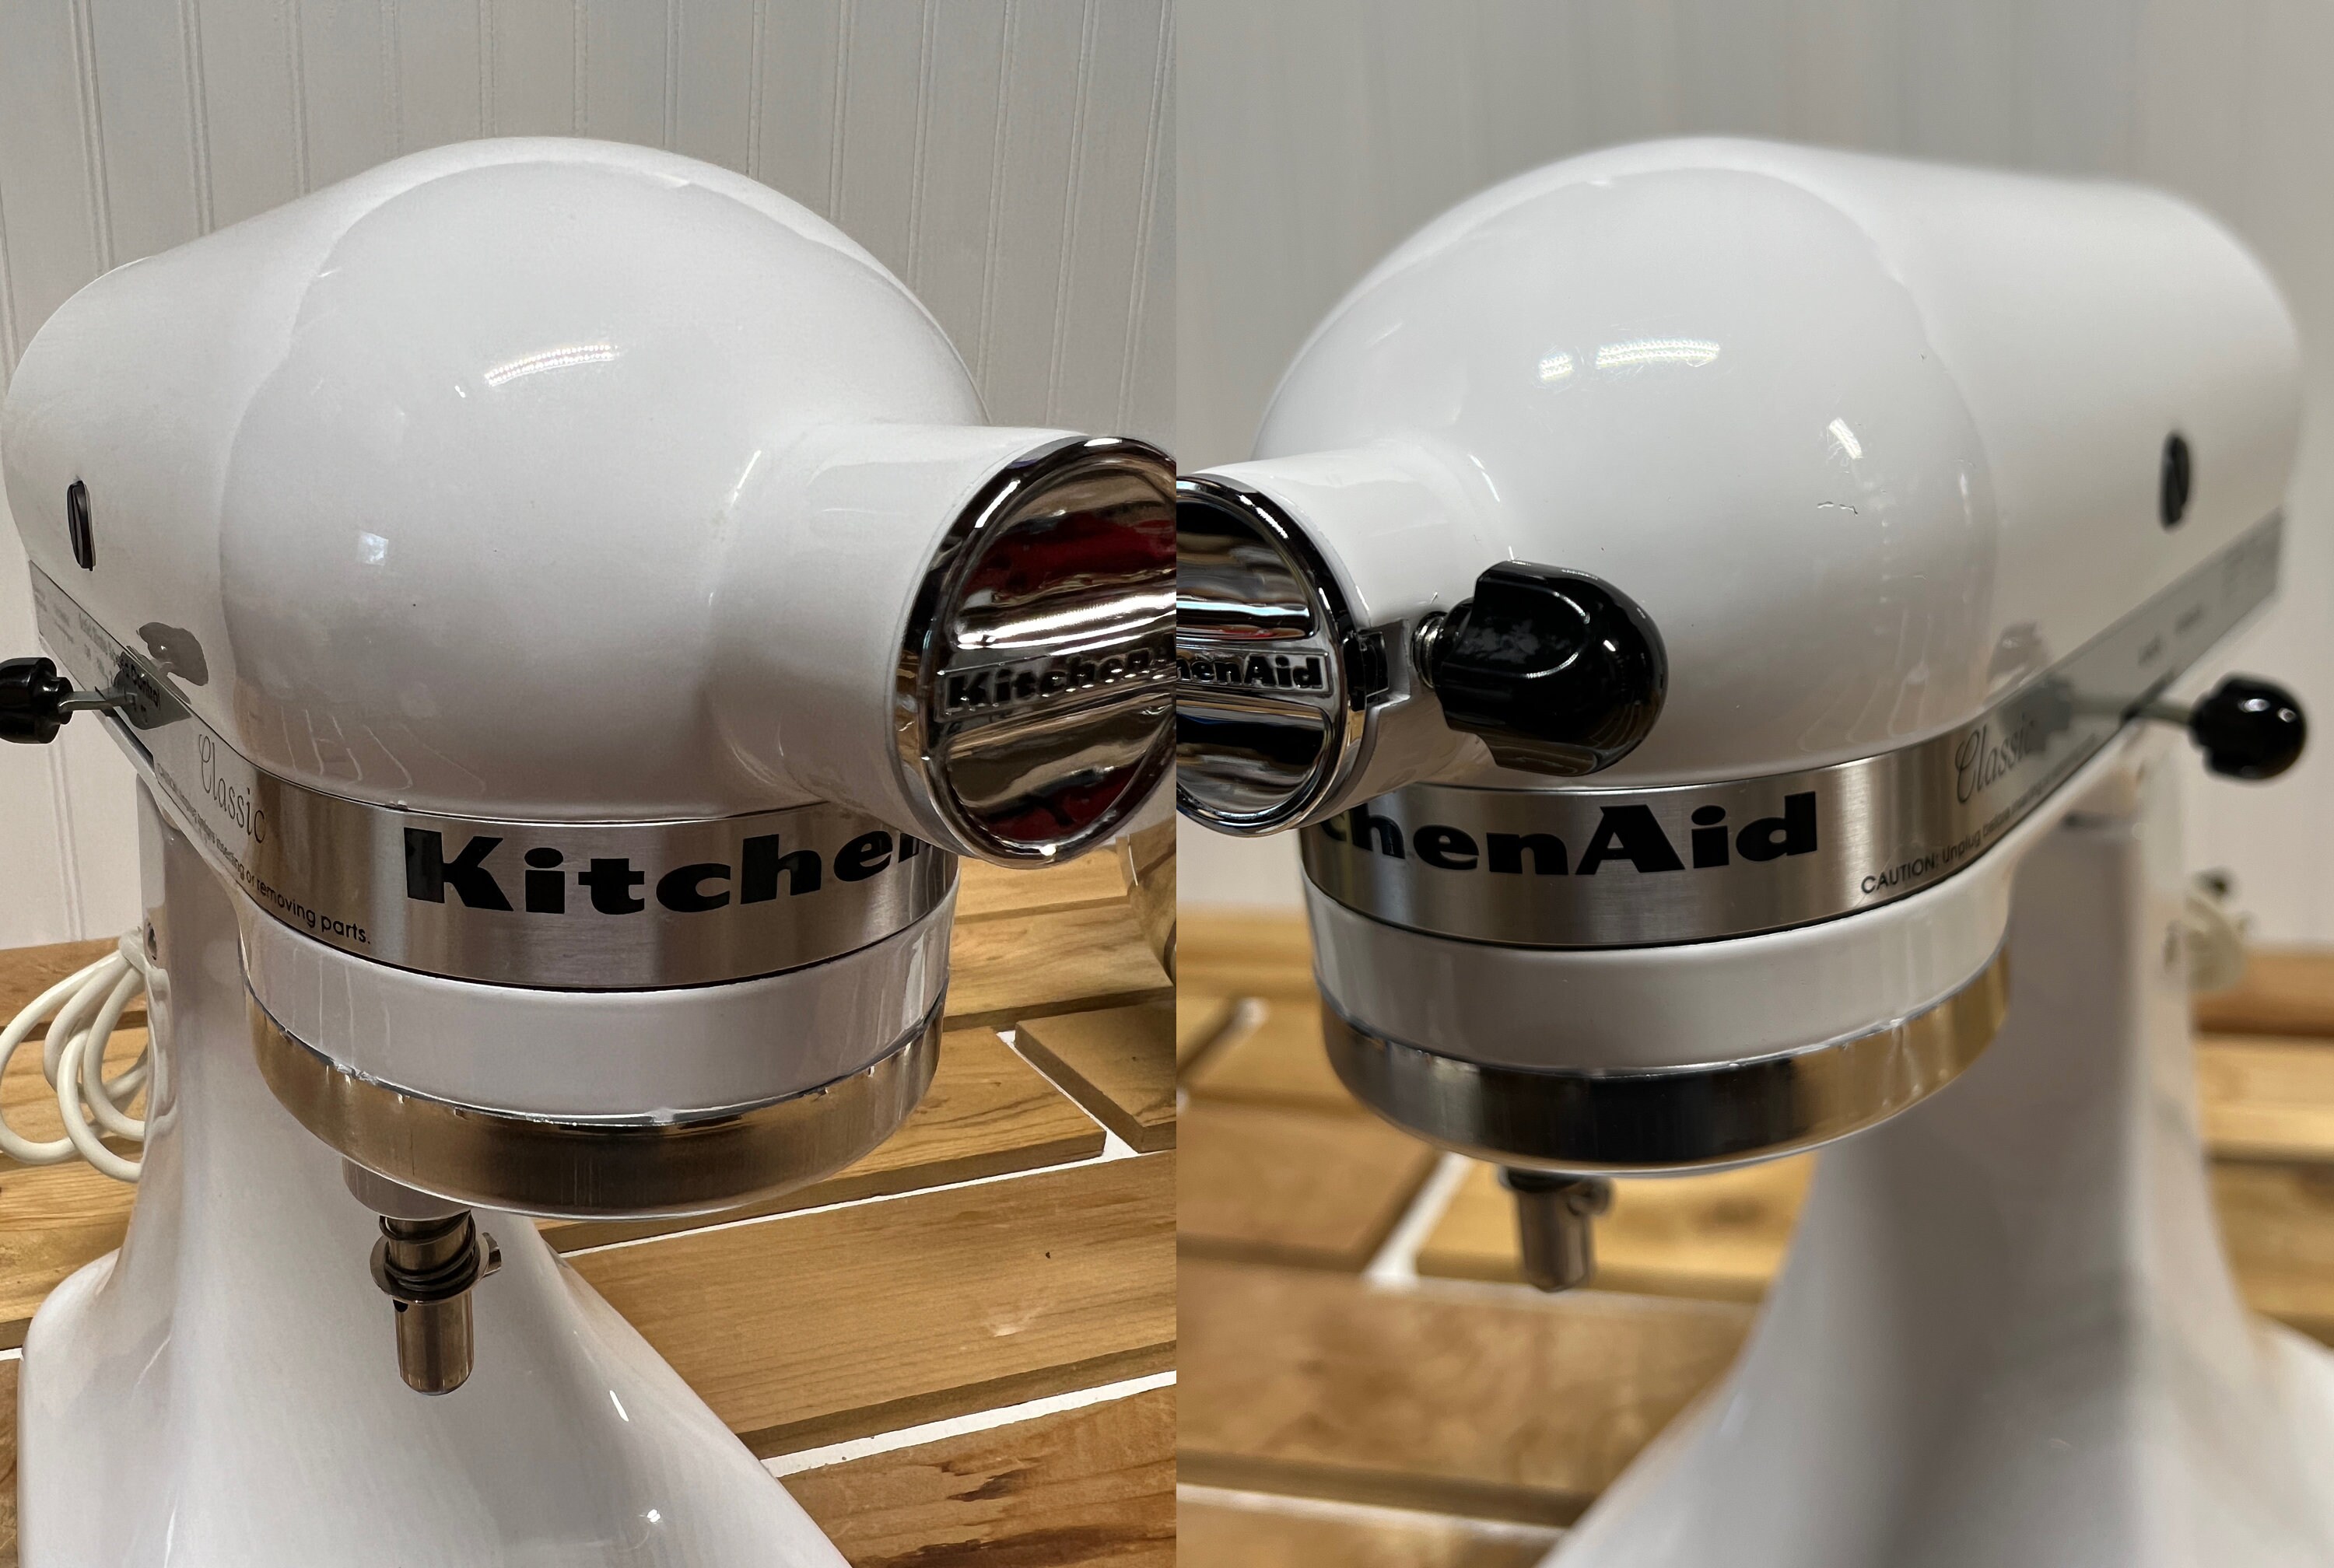 KitchenAid Classic (250 watt) K45SS[WH] Mixer Review - Consumer Reports